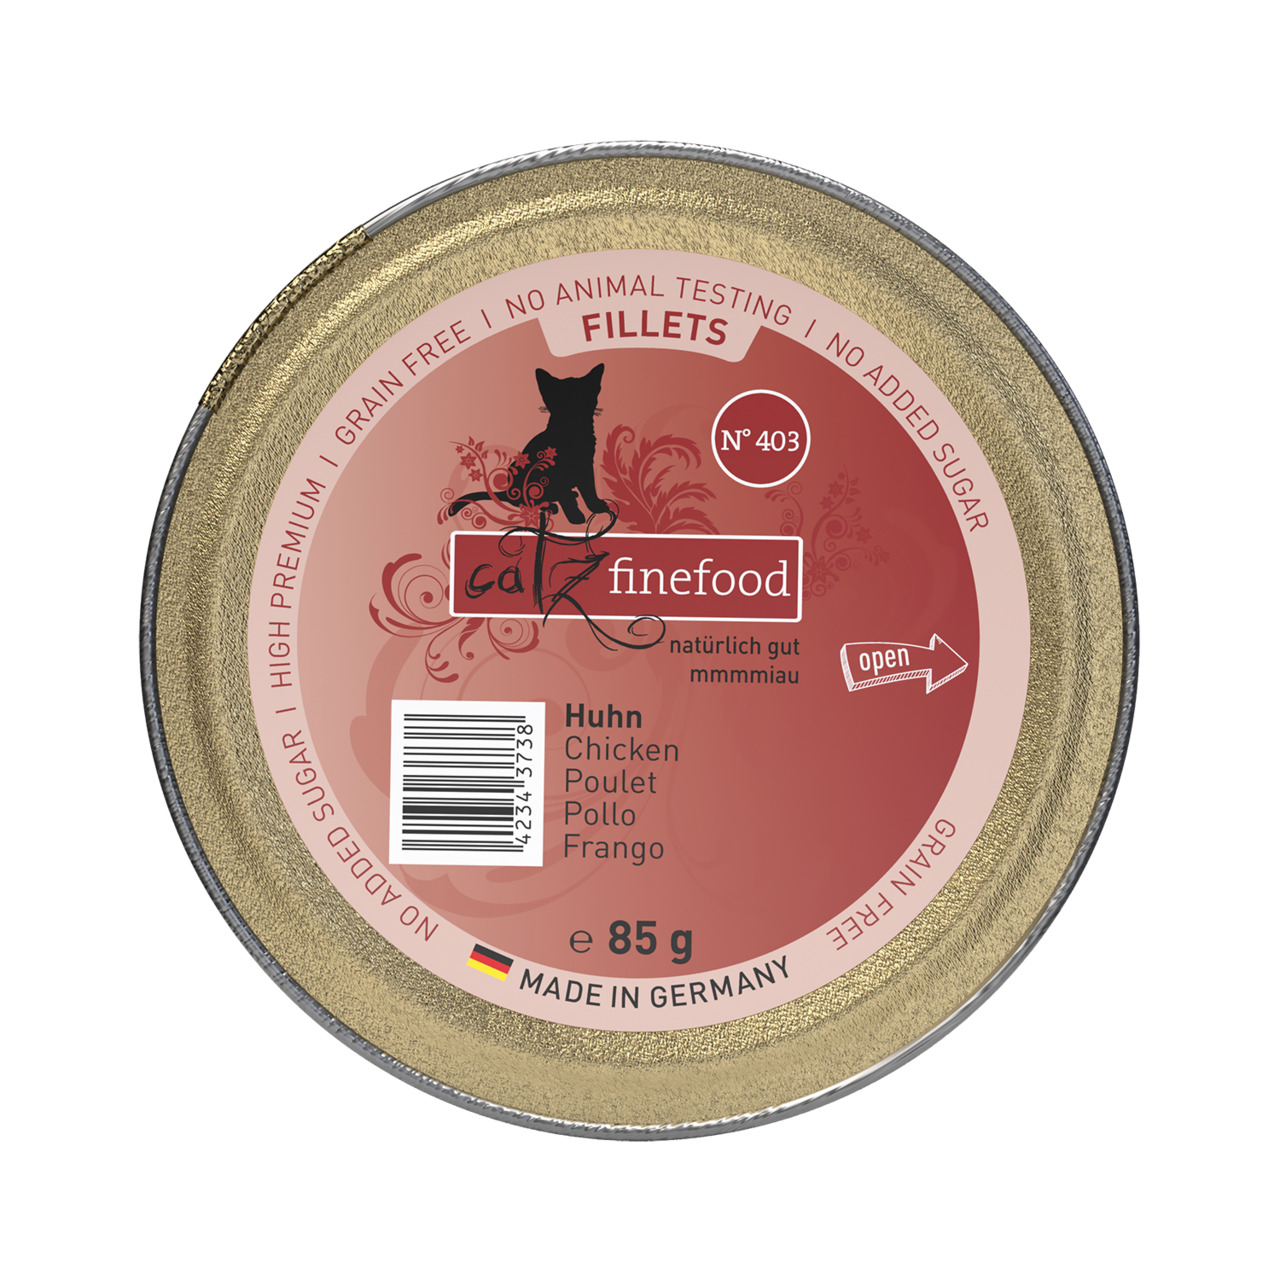 Catz finefood Fillets in Jelly Huhn No. 403 Katzen Nassfutter 85 g